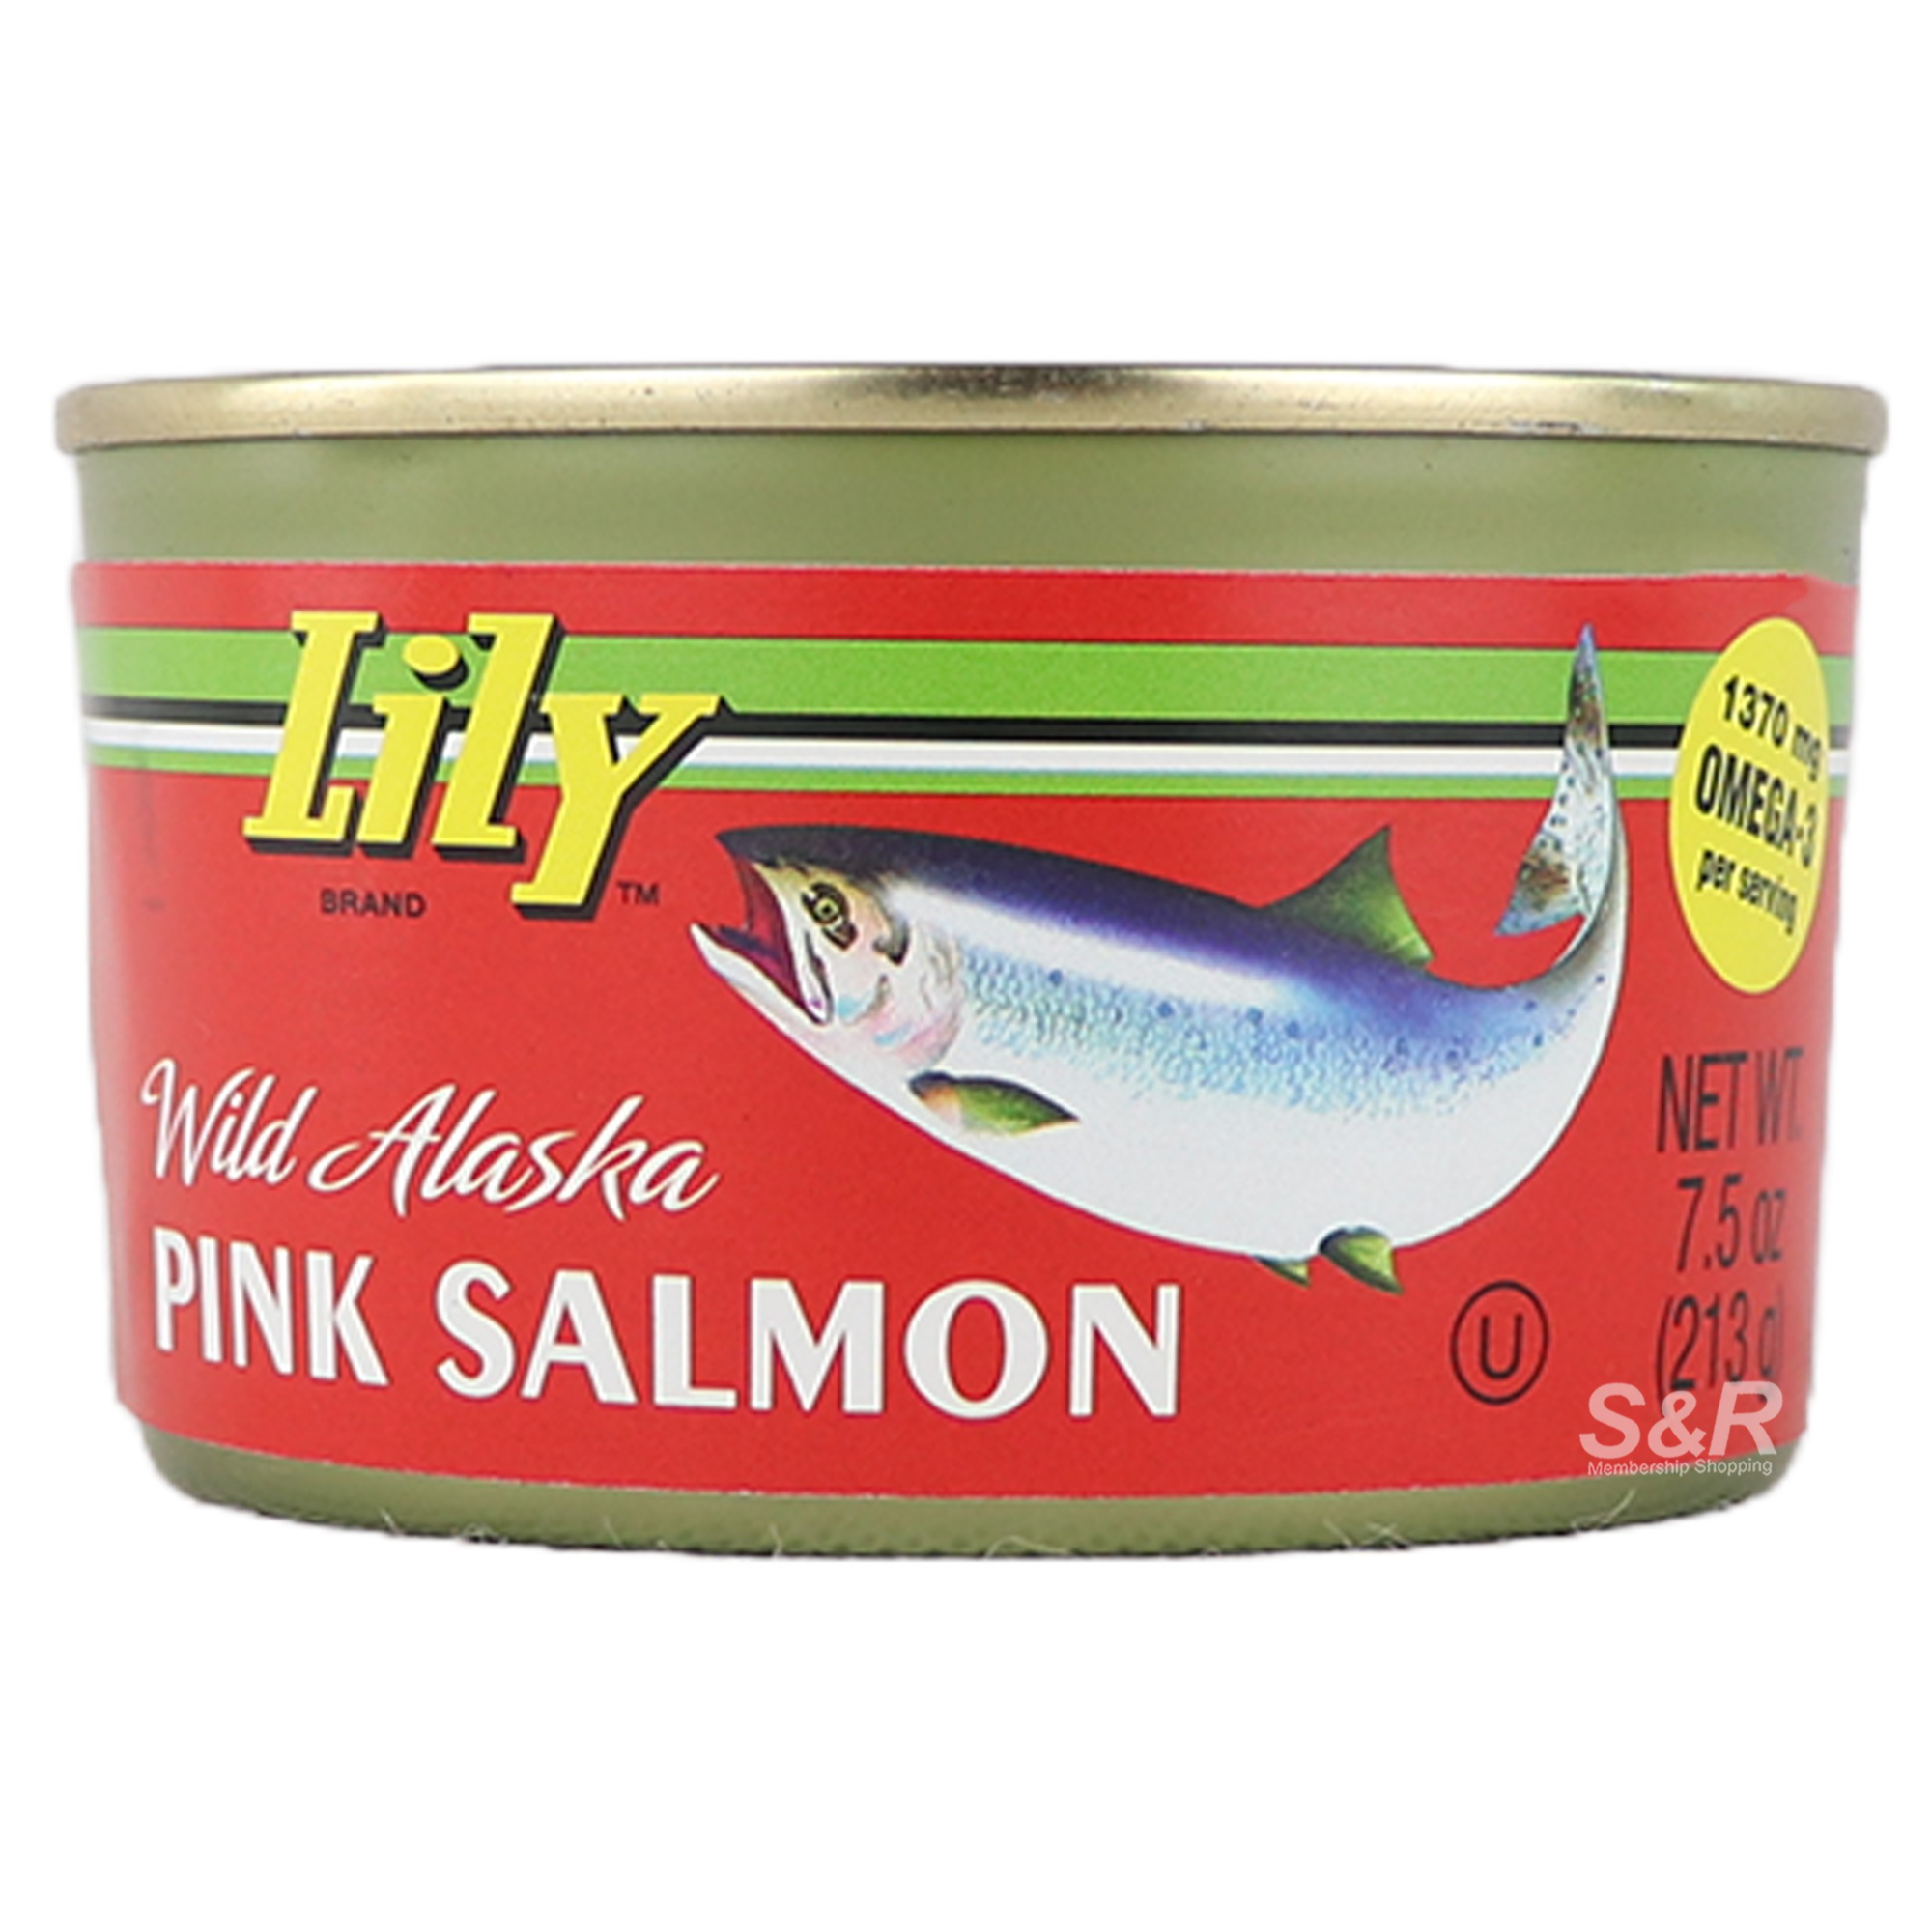 Lily Wild Alaska Pink Salmon 213g